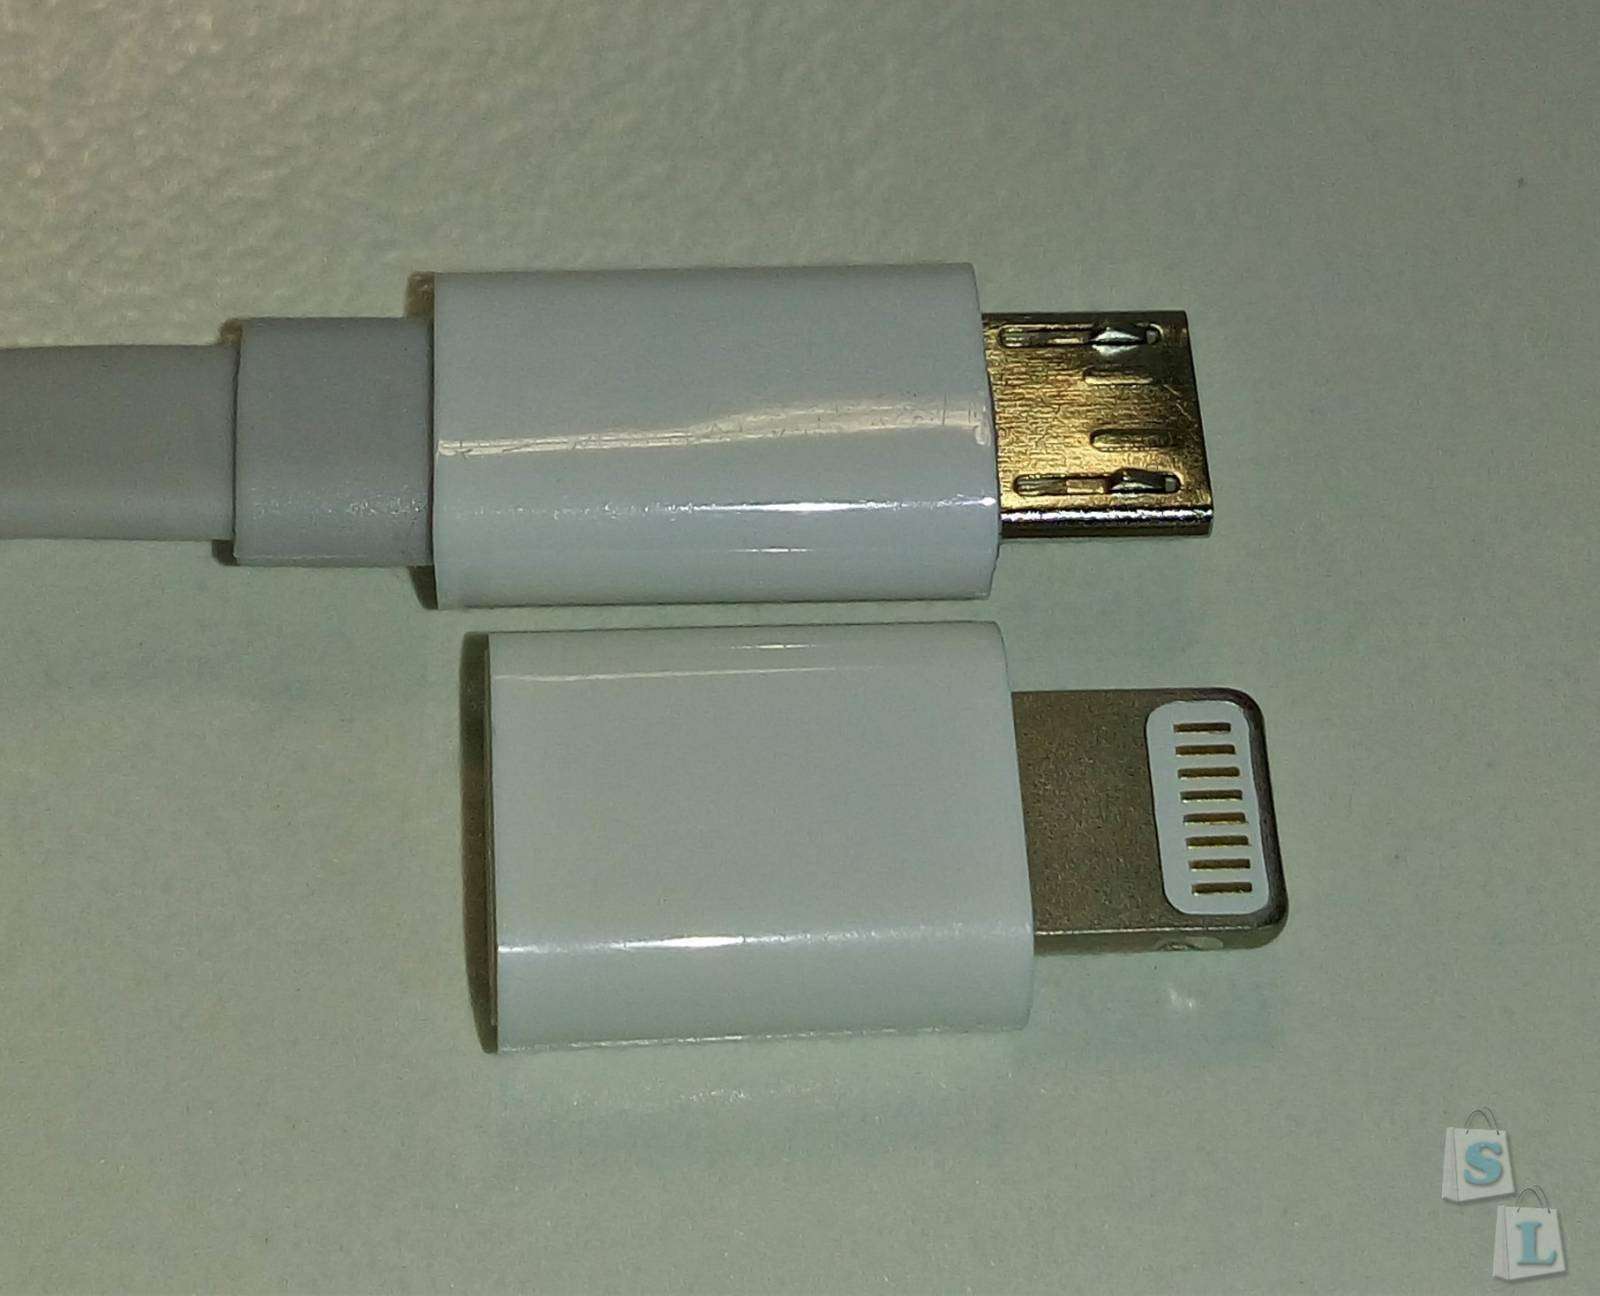 Aliexpress: micro USB to Lighting переходник для Iphone 5